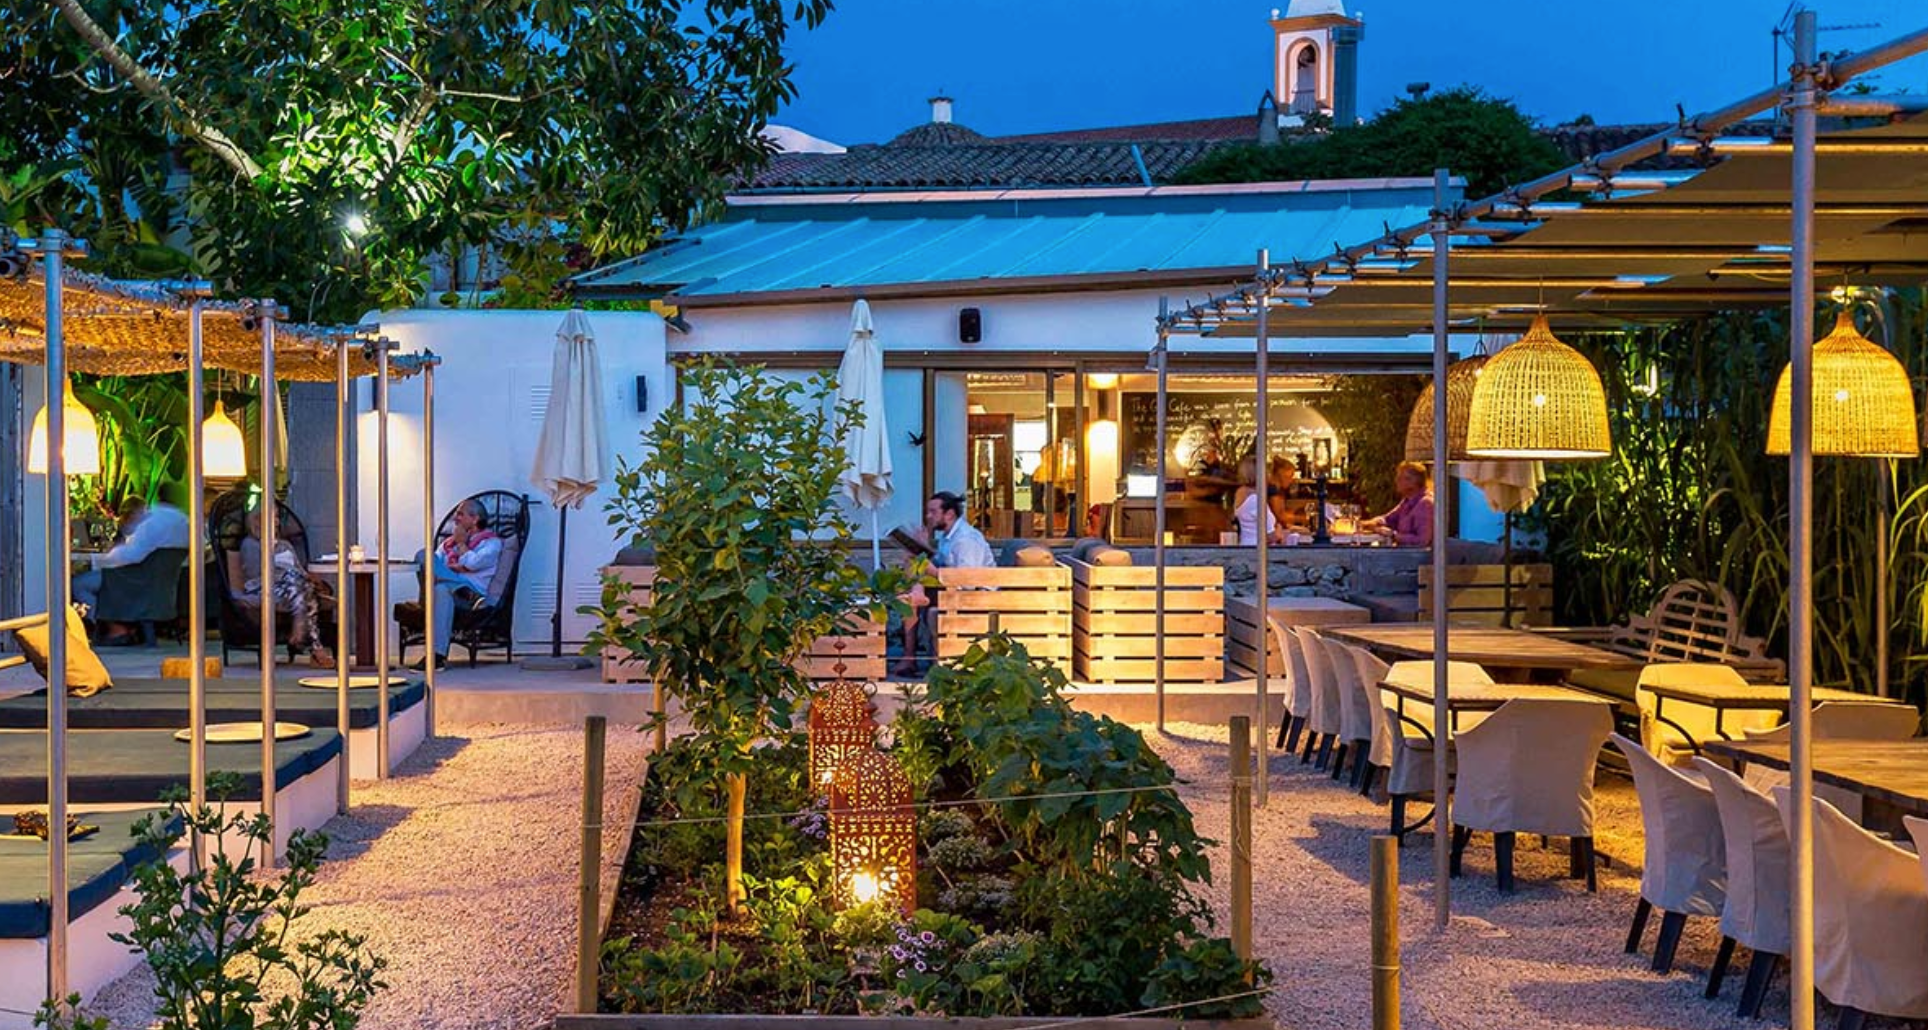 The Giri Cafe, Ibiza